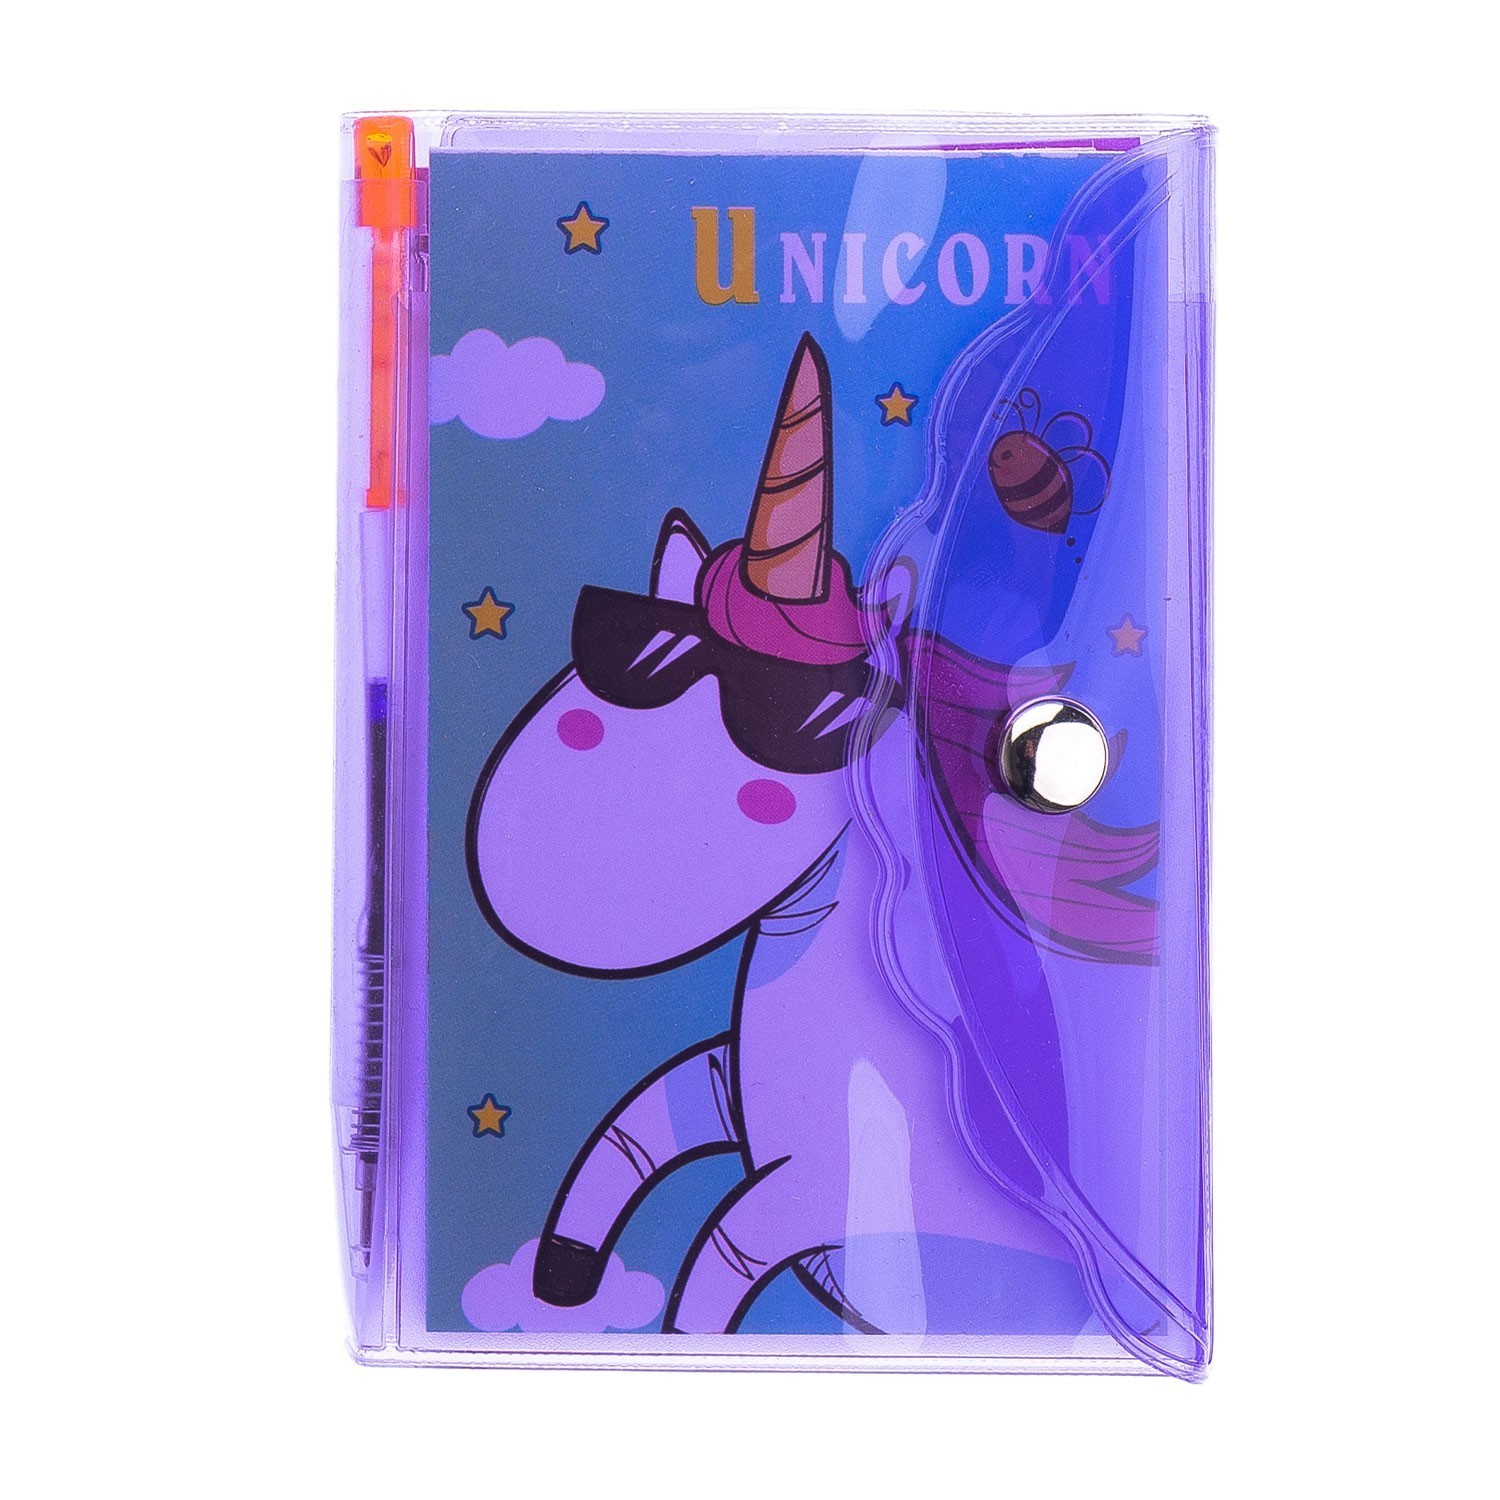 Unicorn Kapaklı Mini Kalemli Not Defteri